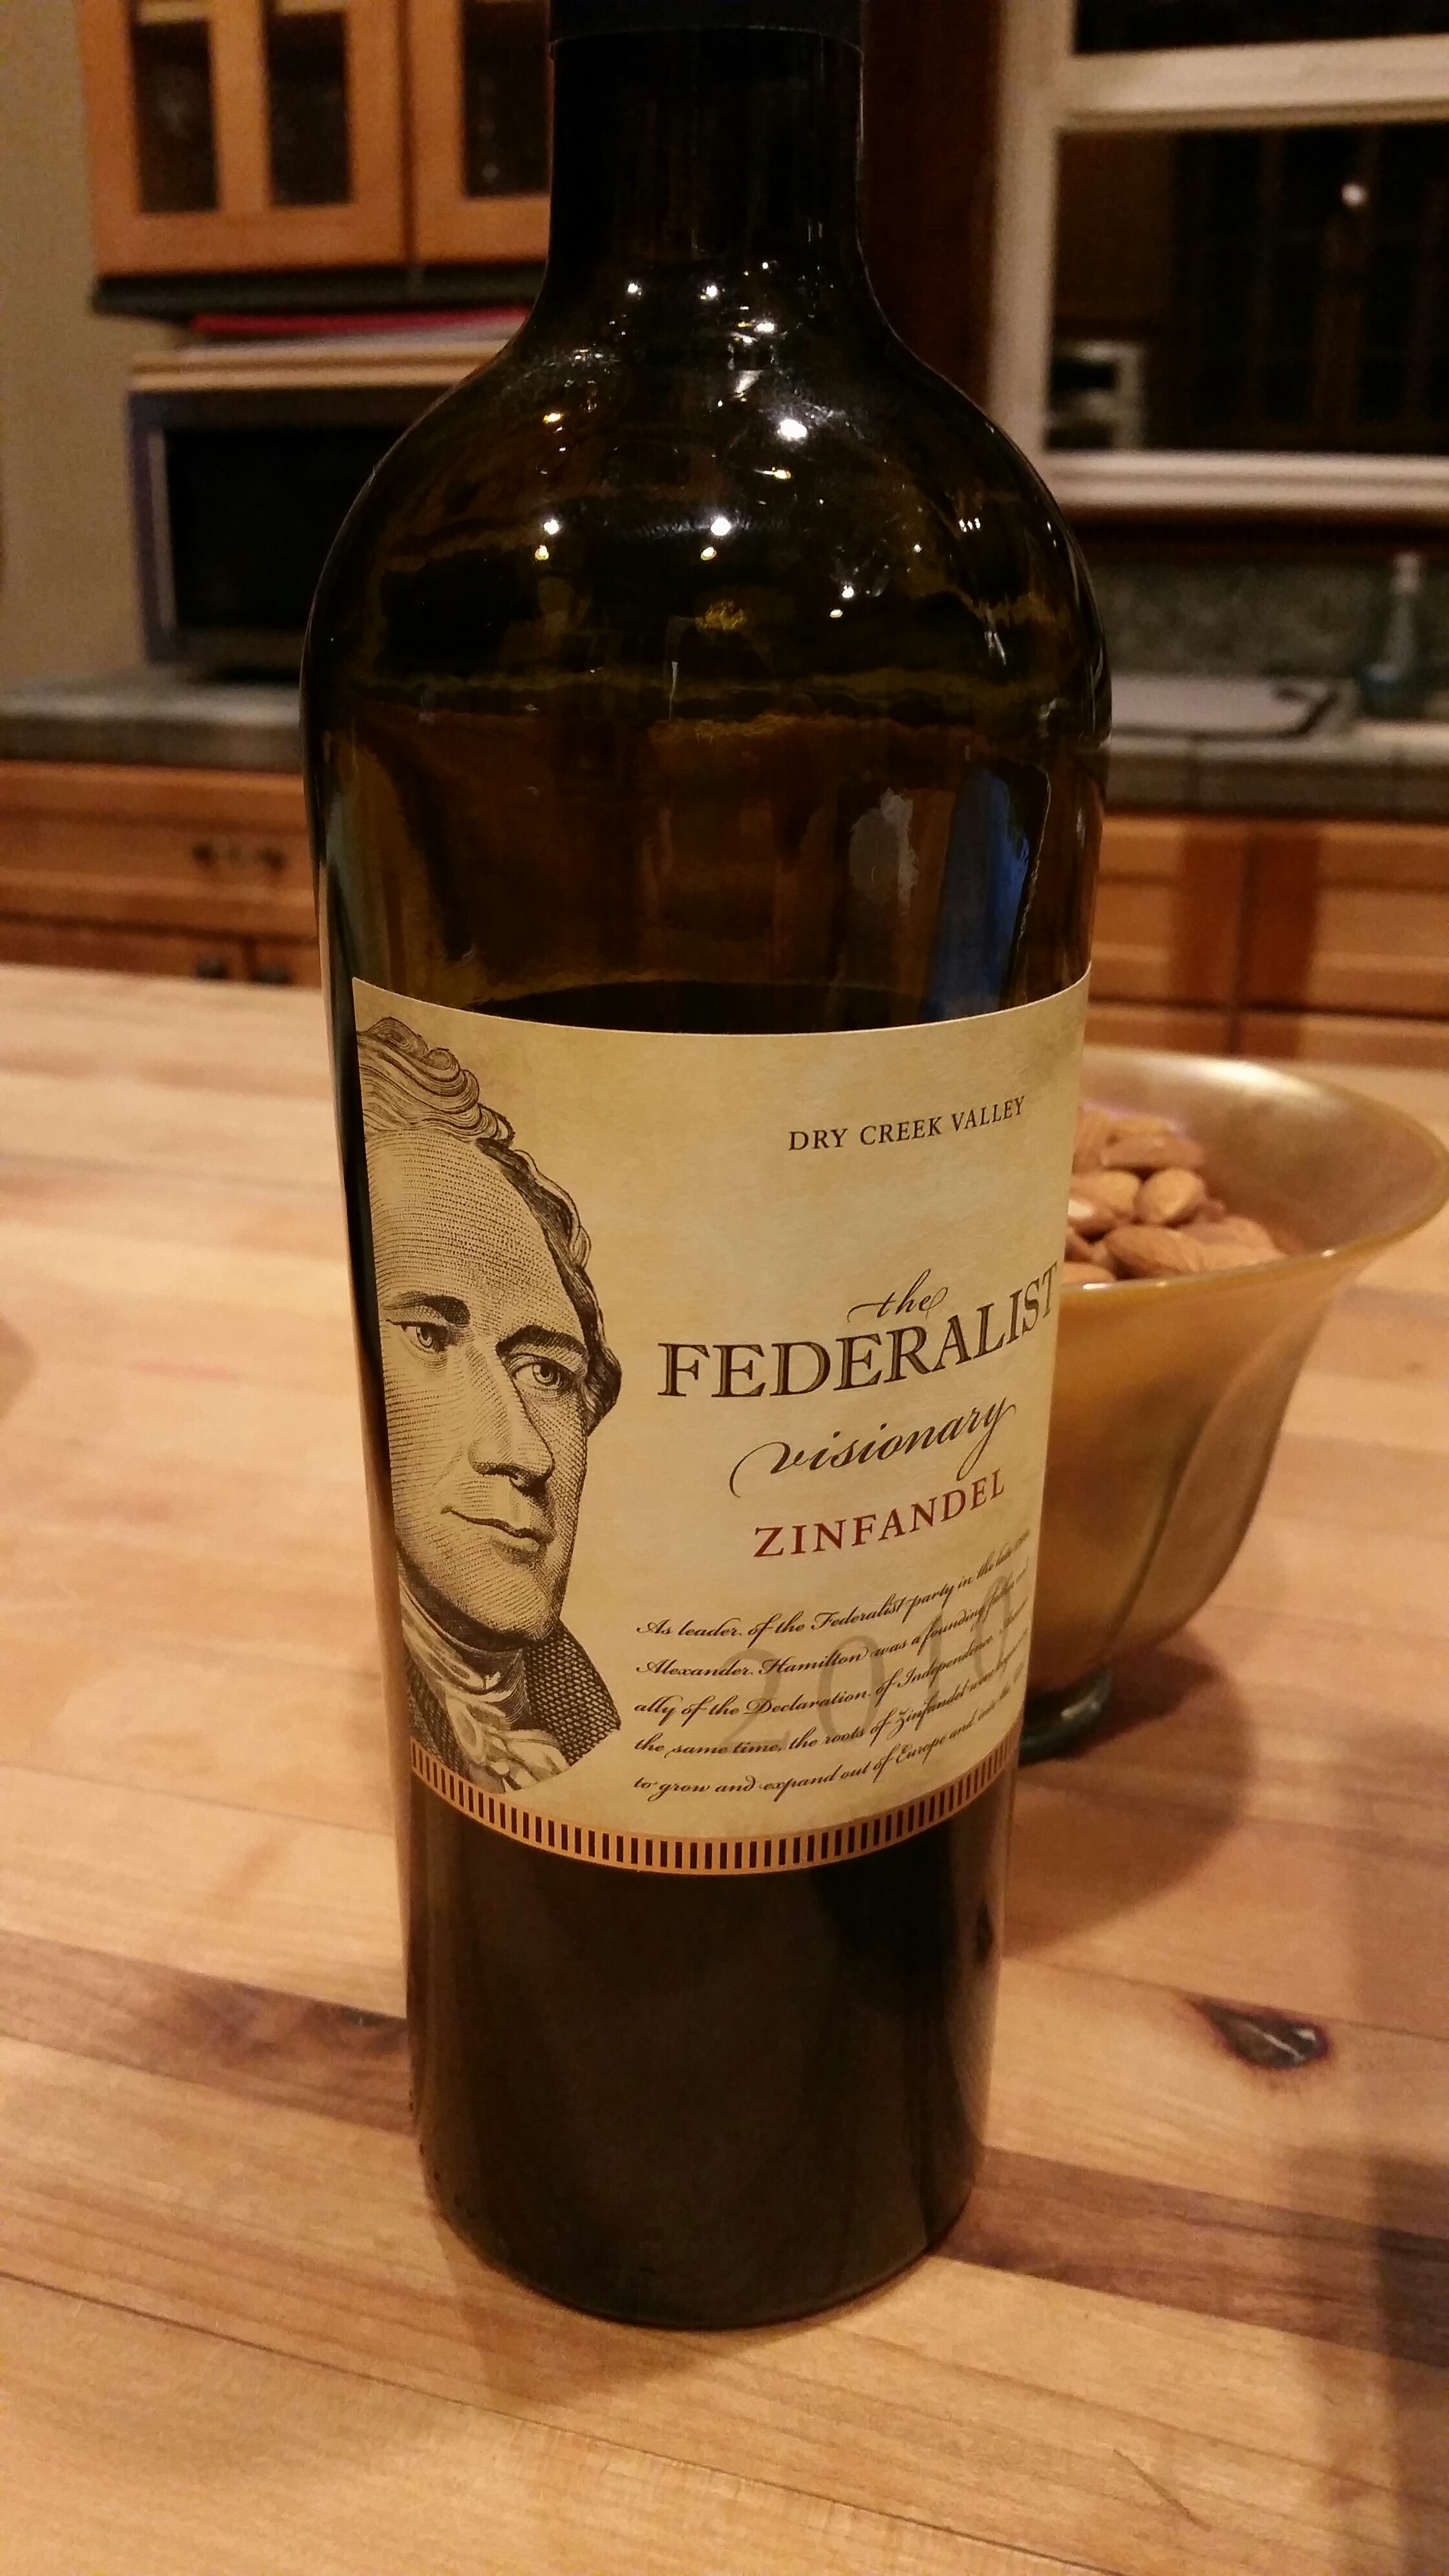 label is deceiving; a local winemaker's reused bottle.